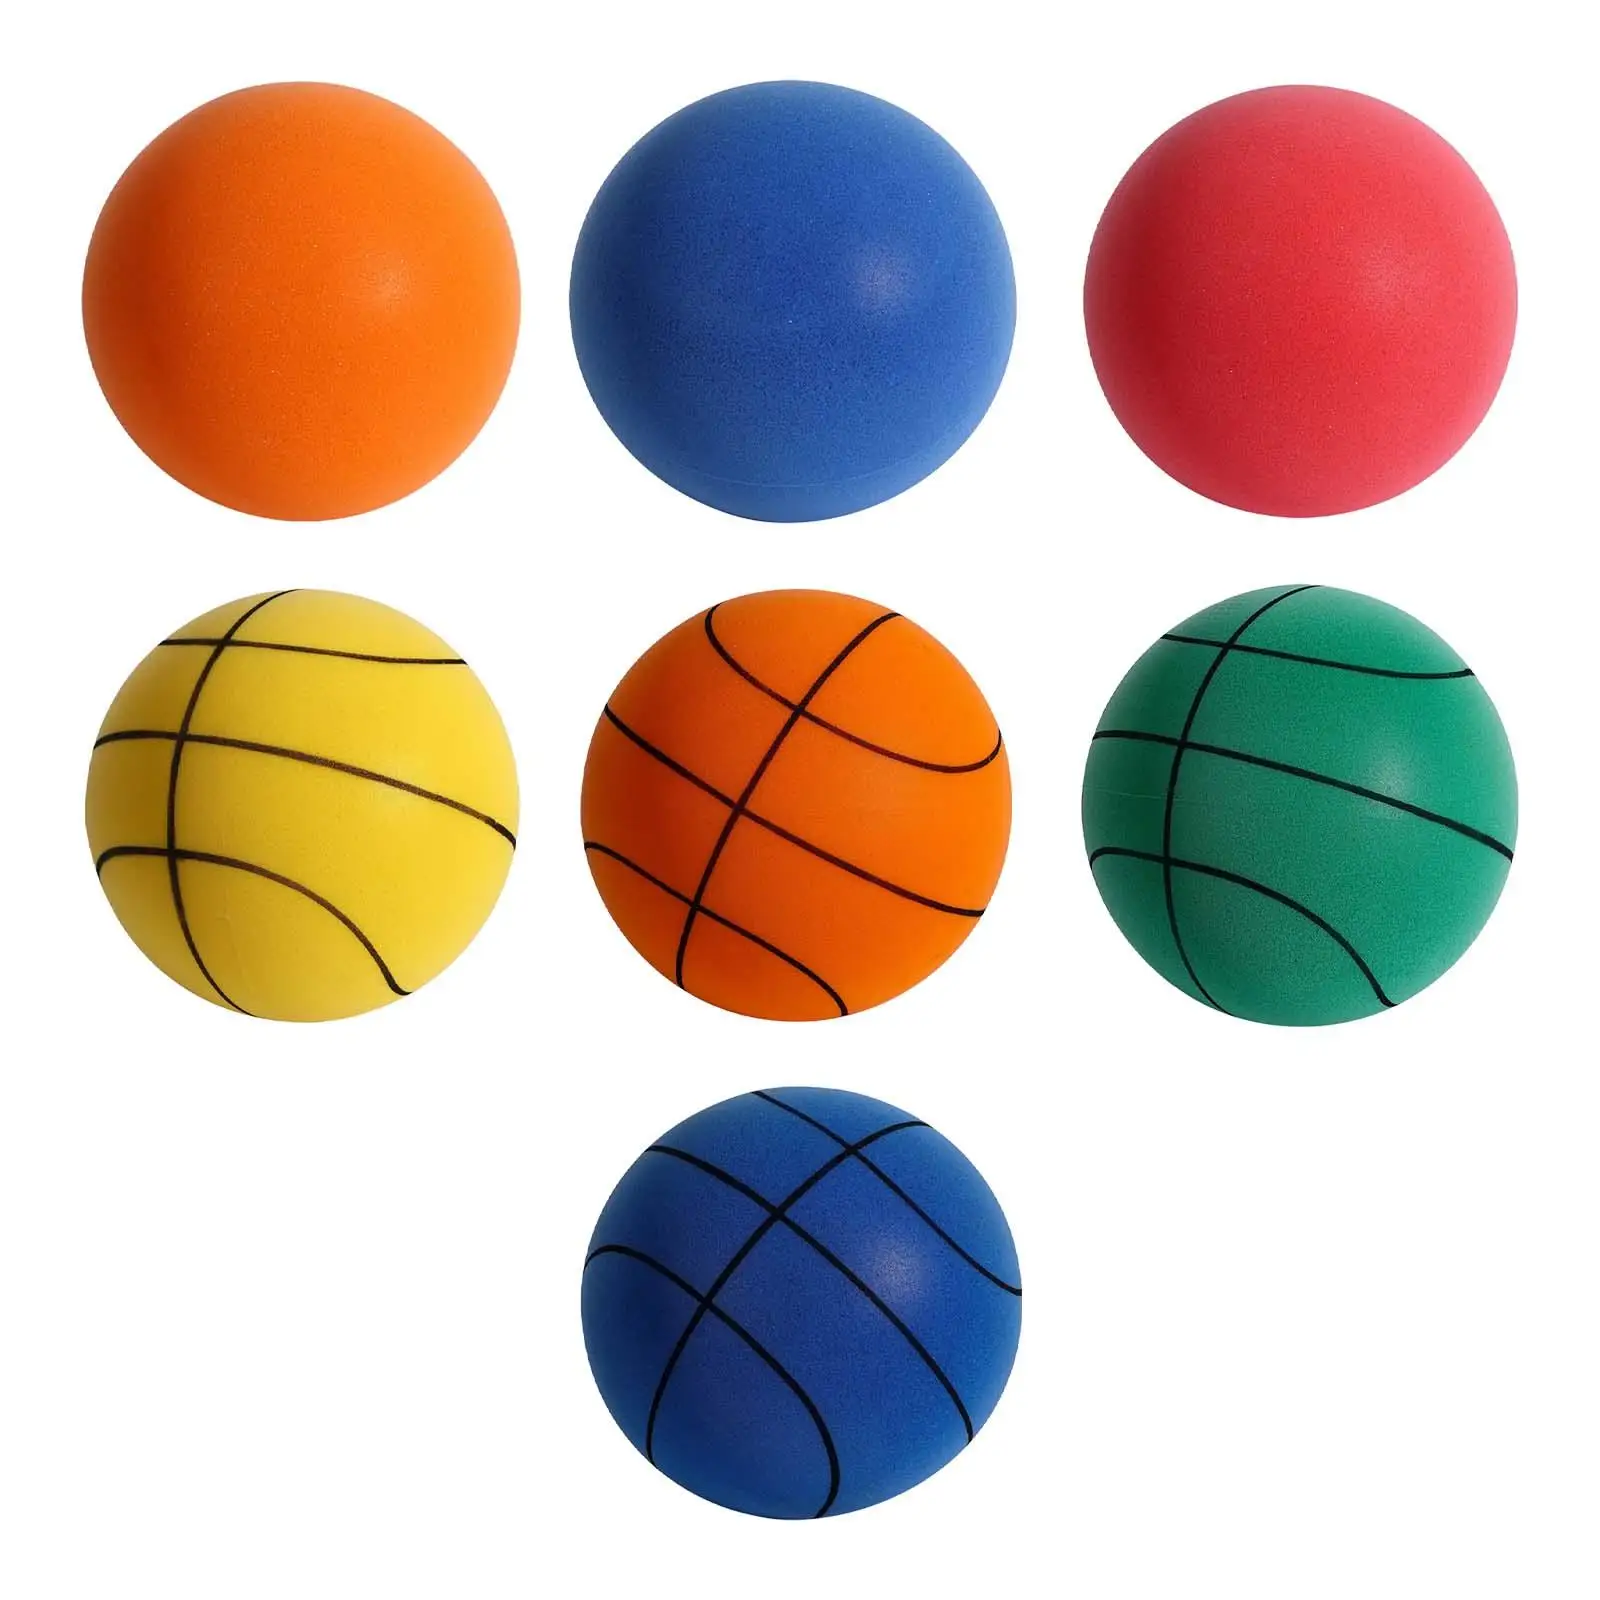 Bouncy Balls Sensory Ball Outdoor Indoor Activities Silent Ball Toy for